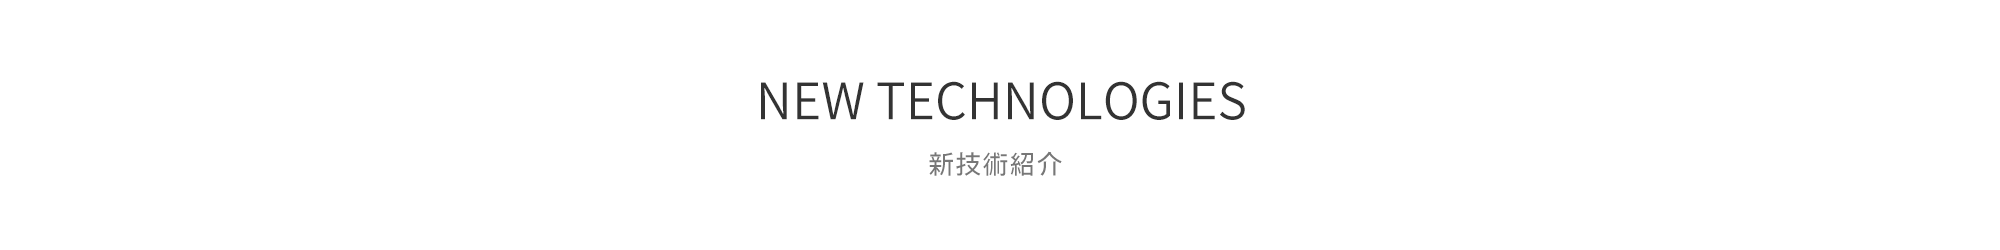 NEW TECHNOLOGIES / 新技術紹介